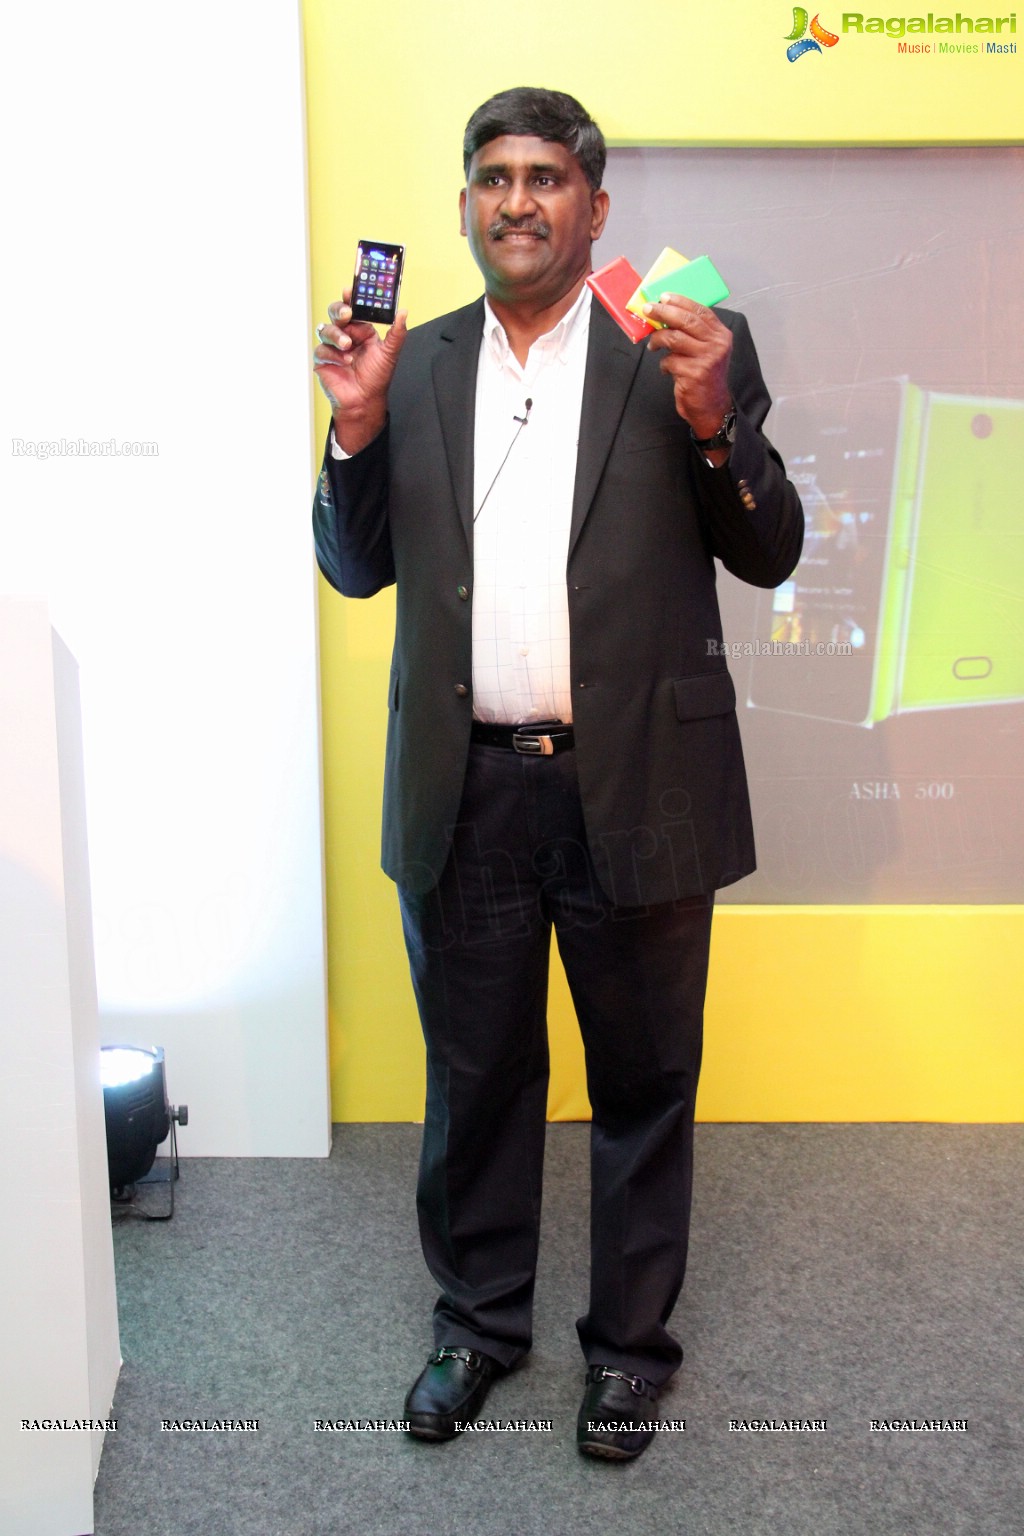 Nokia India launches Next Generation Nokia Asha Smartphones